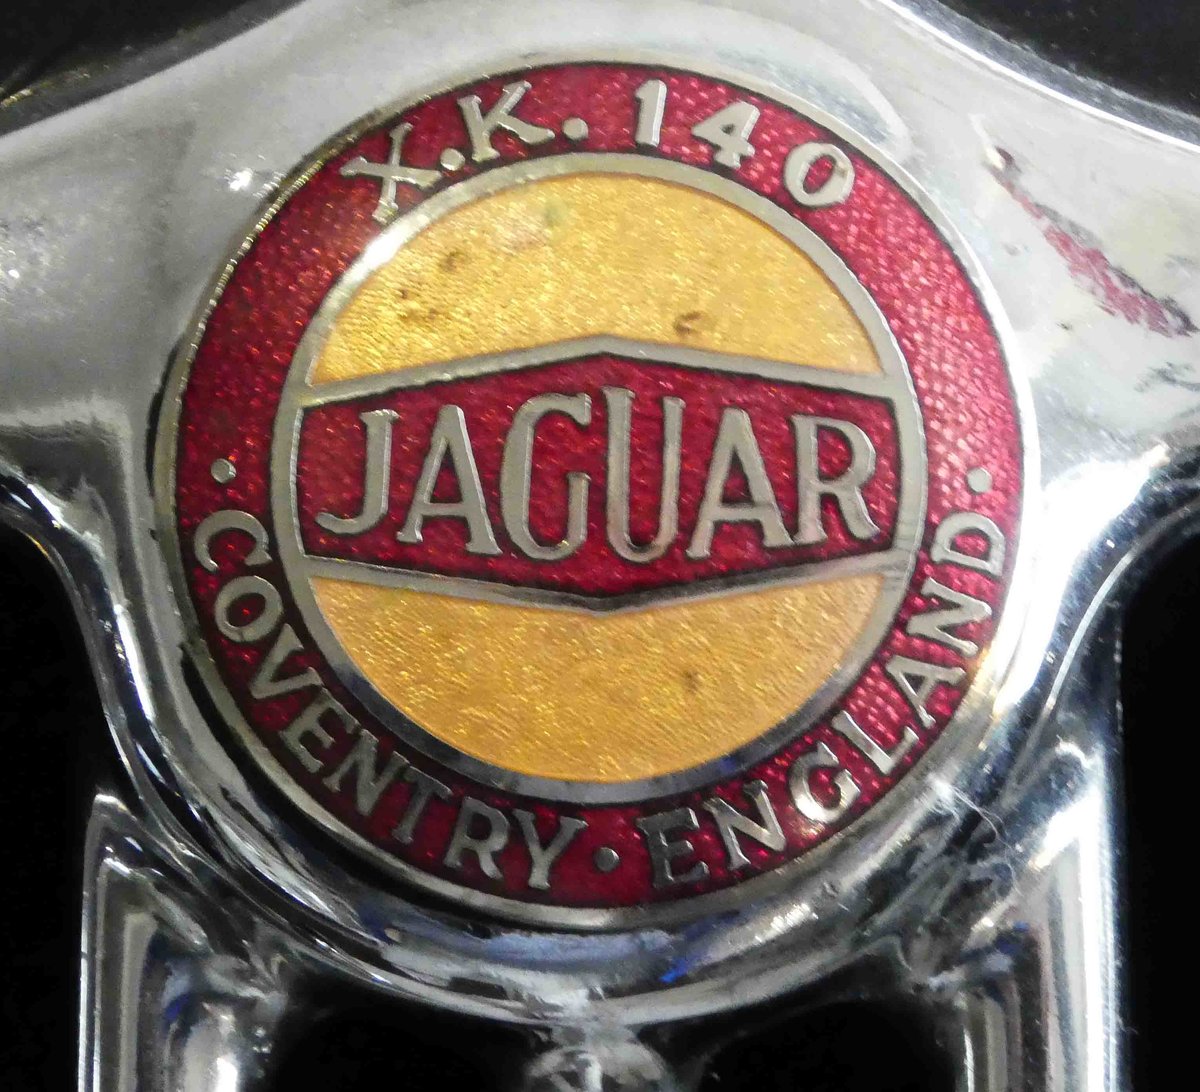 =Emblem des Jaguar XK 140 S, Bauzeit 1954 - 1957, gesehen im Automobilmuseum Fichtelberg im Juli 2018